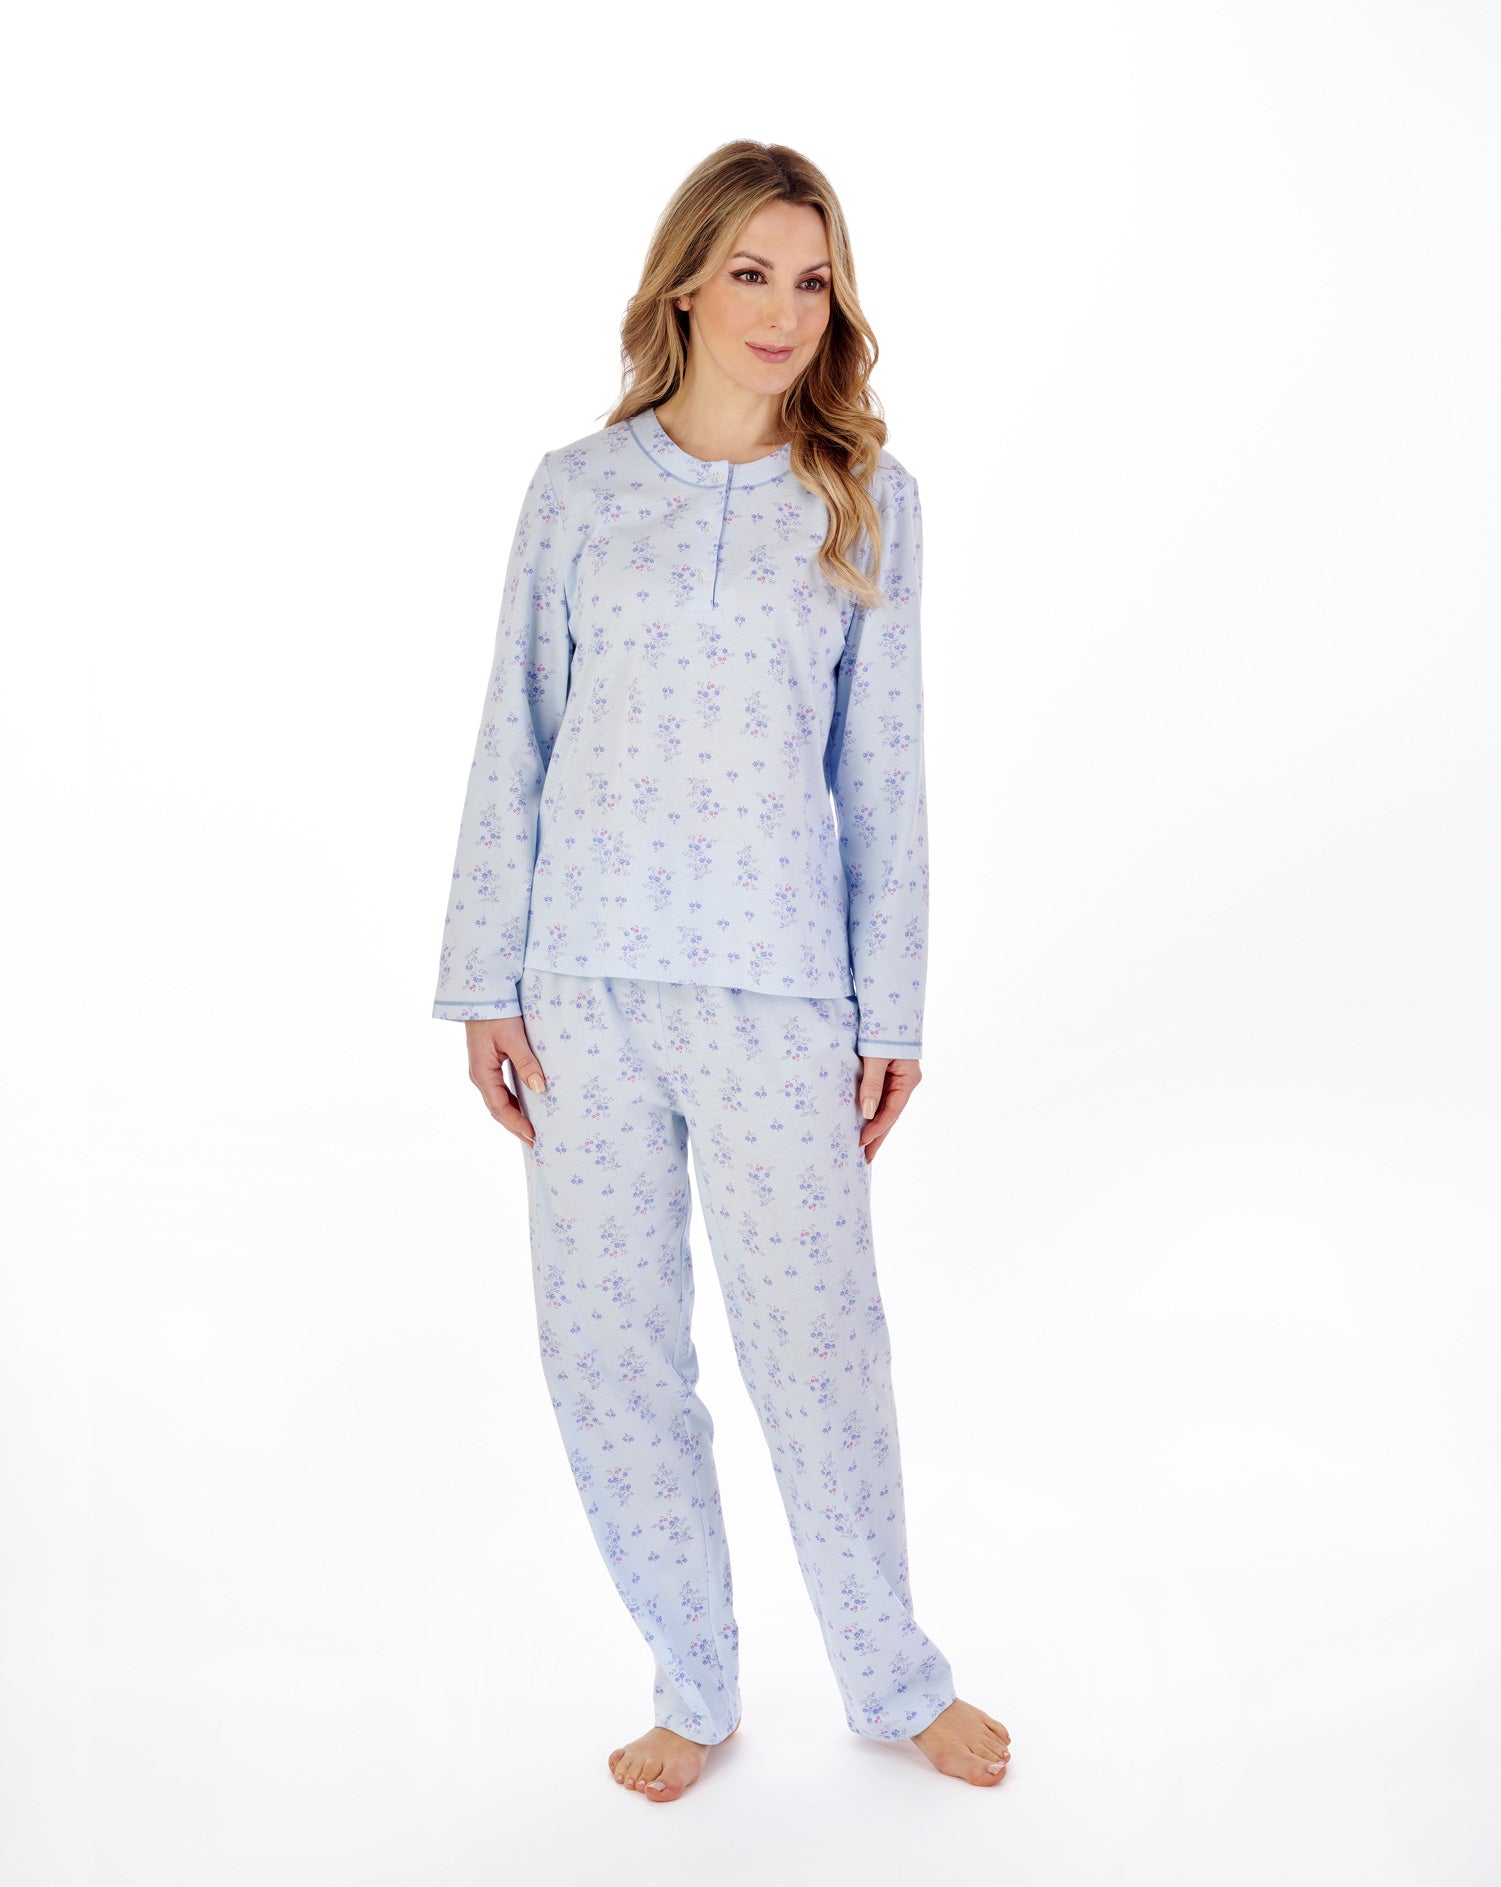 Trailing Floral Cotton Jersey Pyjama Set PJ04137